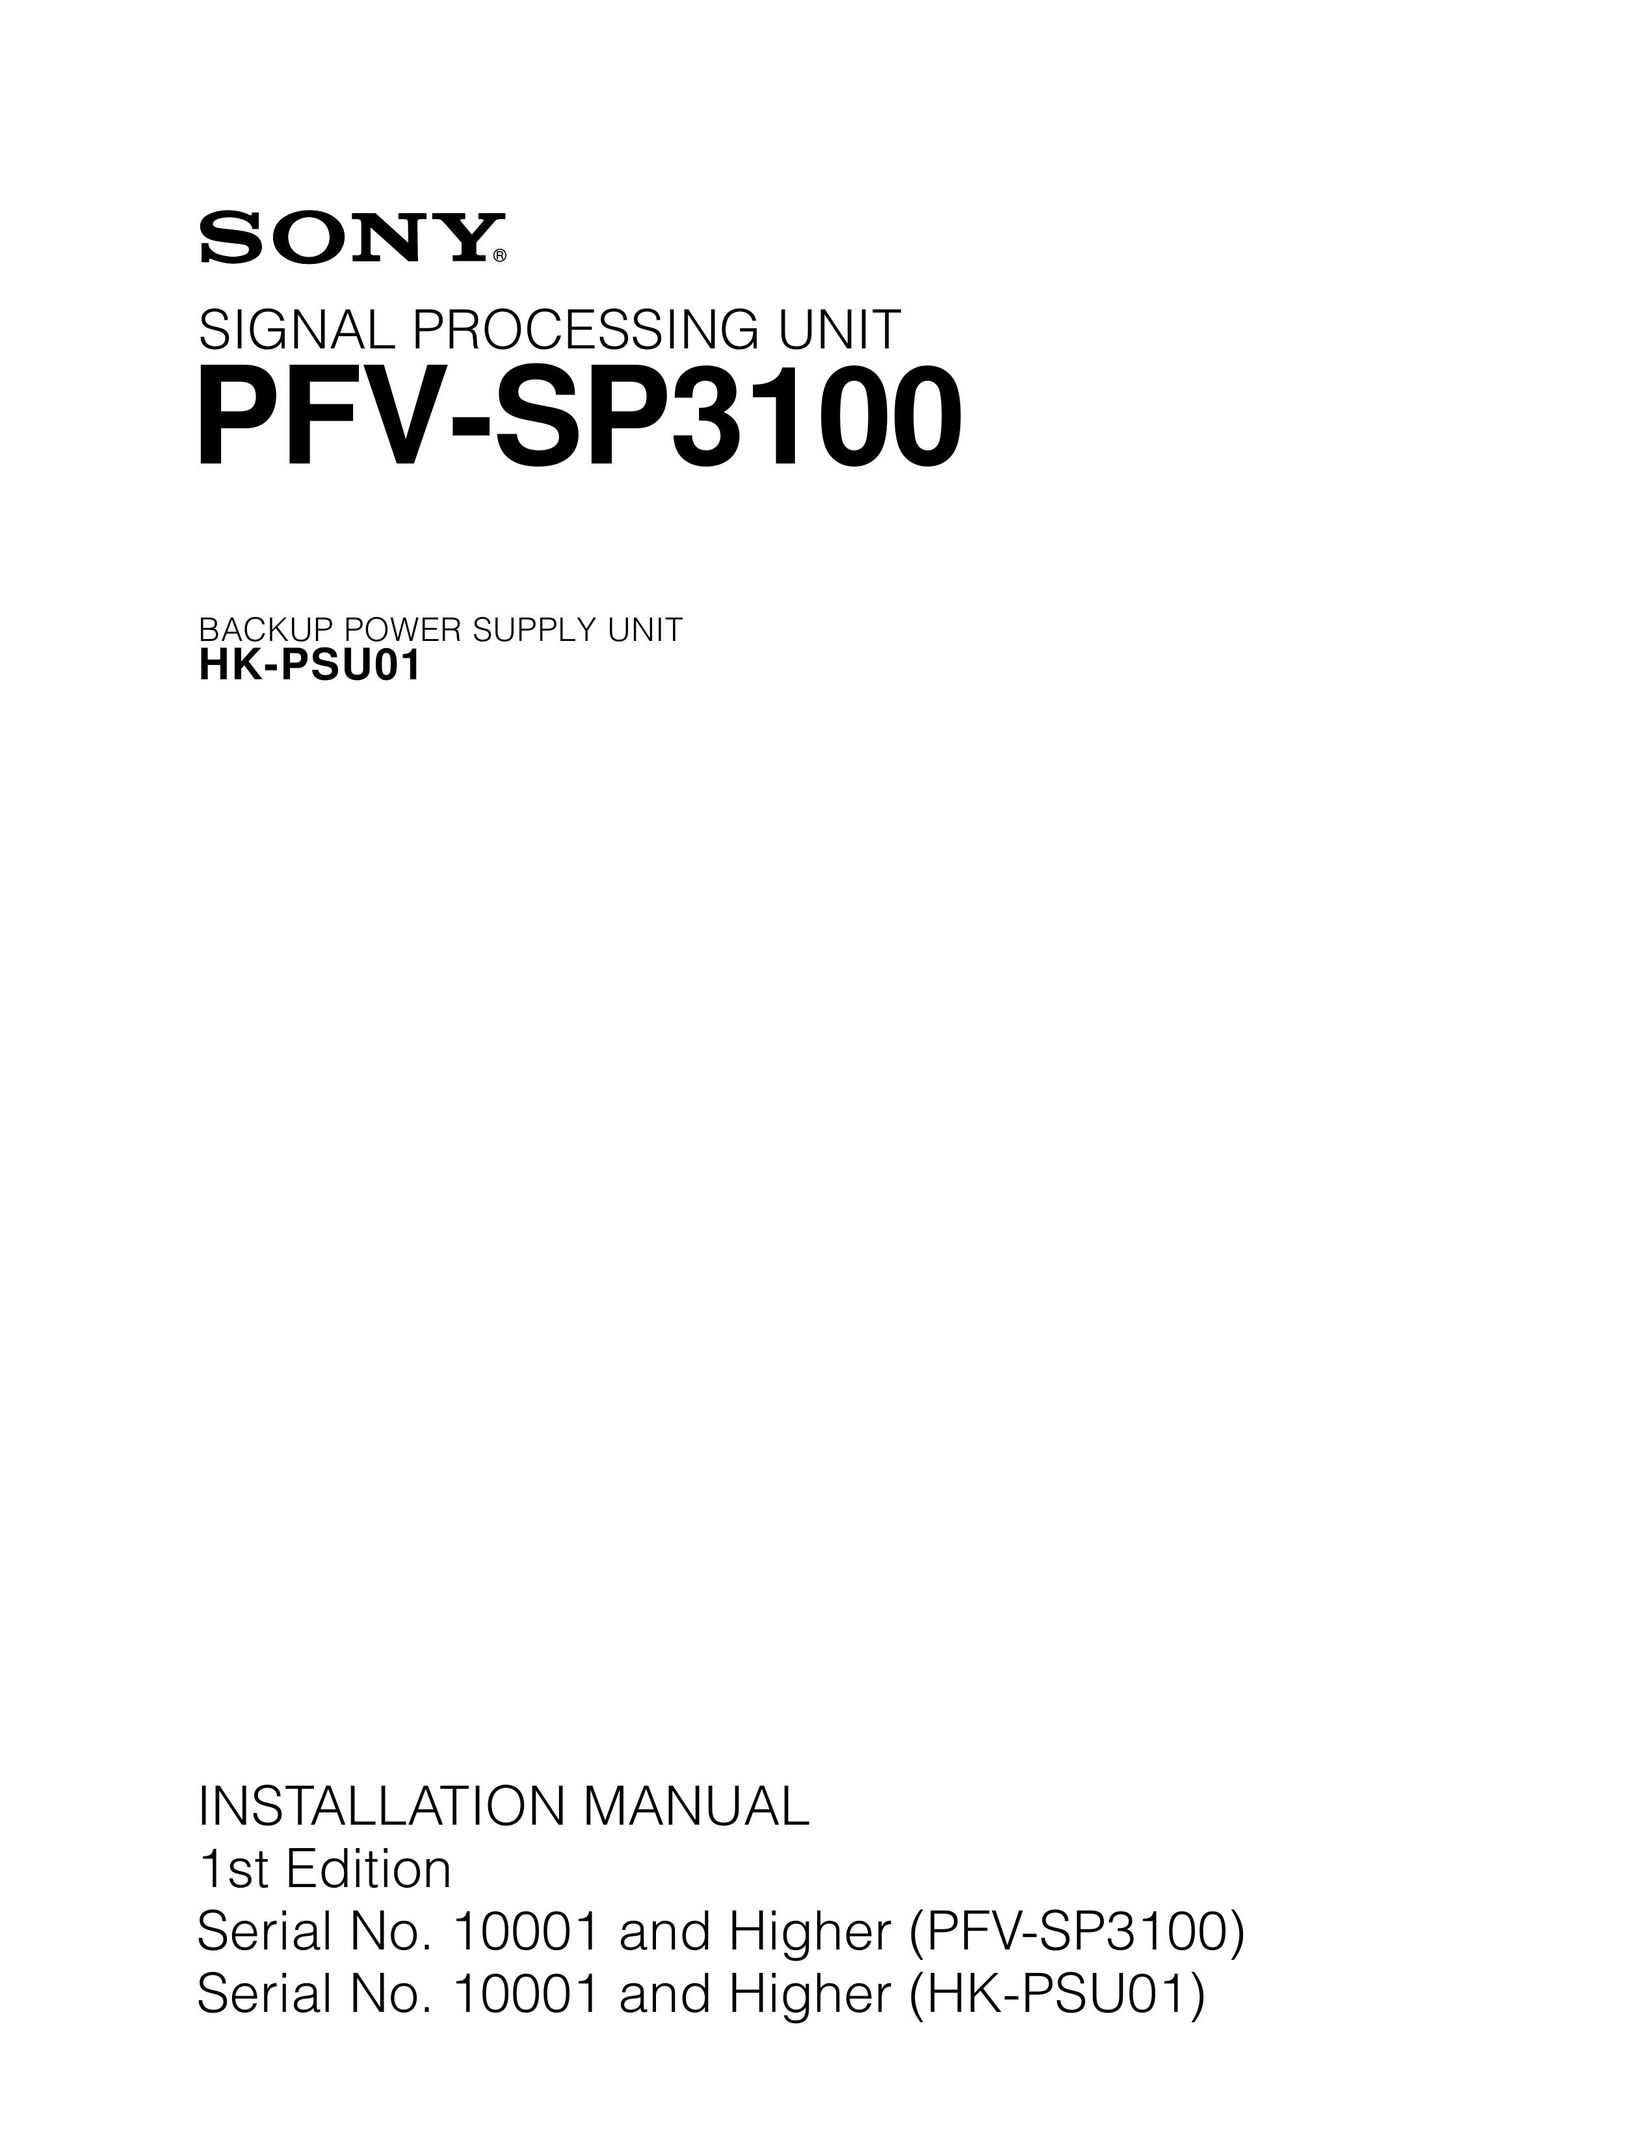 Sony PFV-SP3100 All in One Printer User Manual